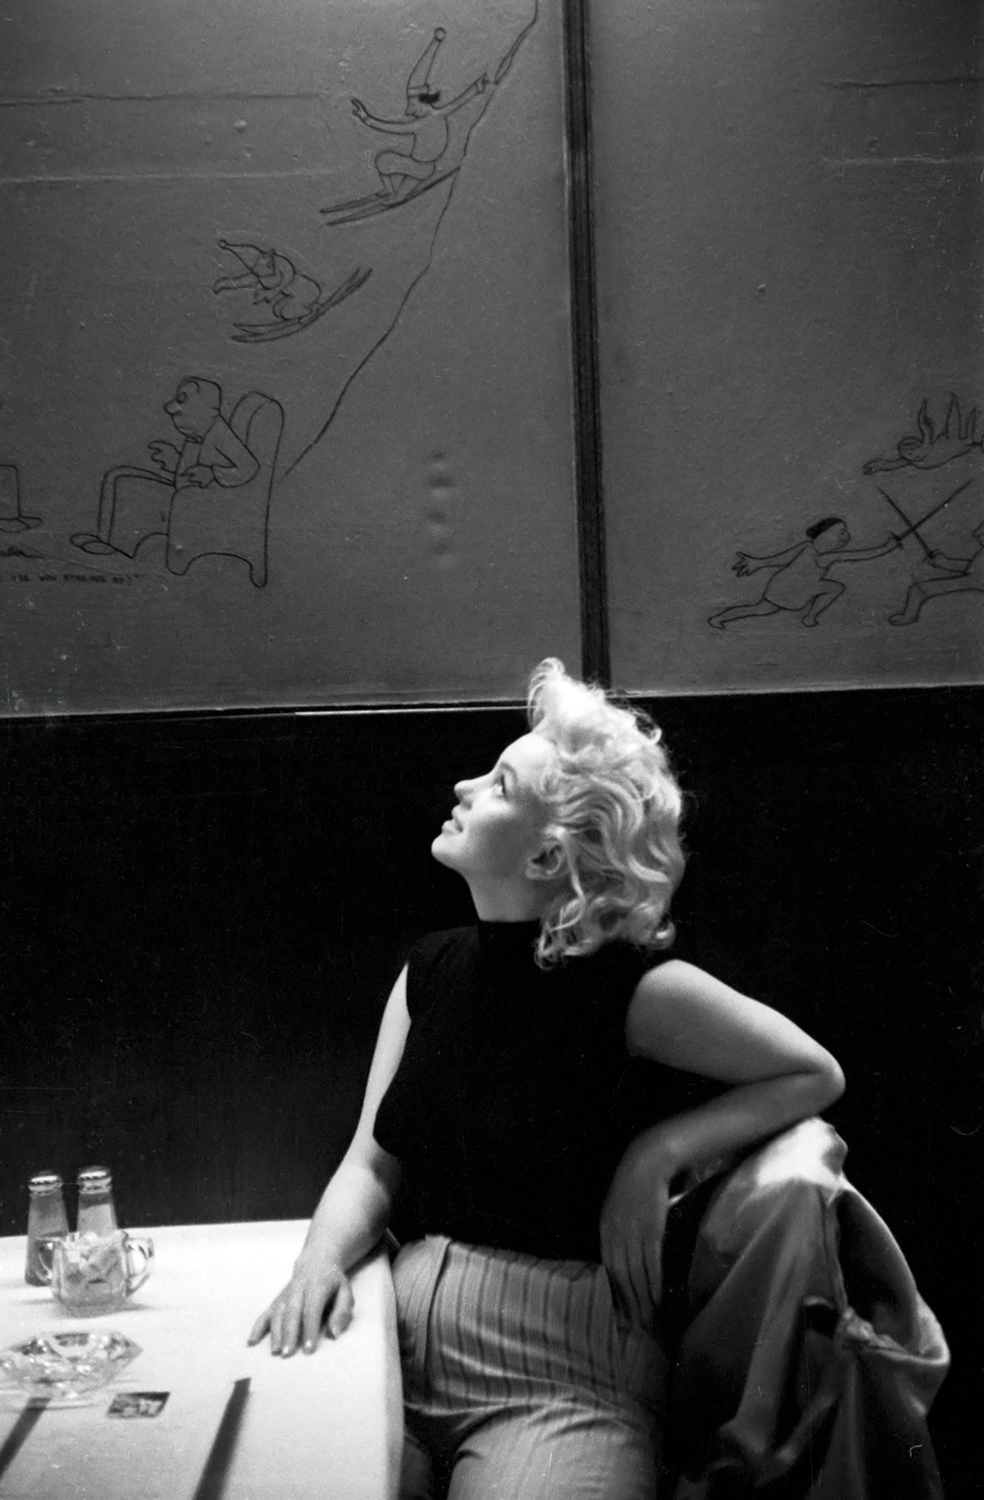 Monroe admiring the artwork at a New York City restaurant in 1955.